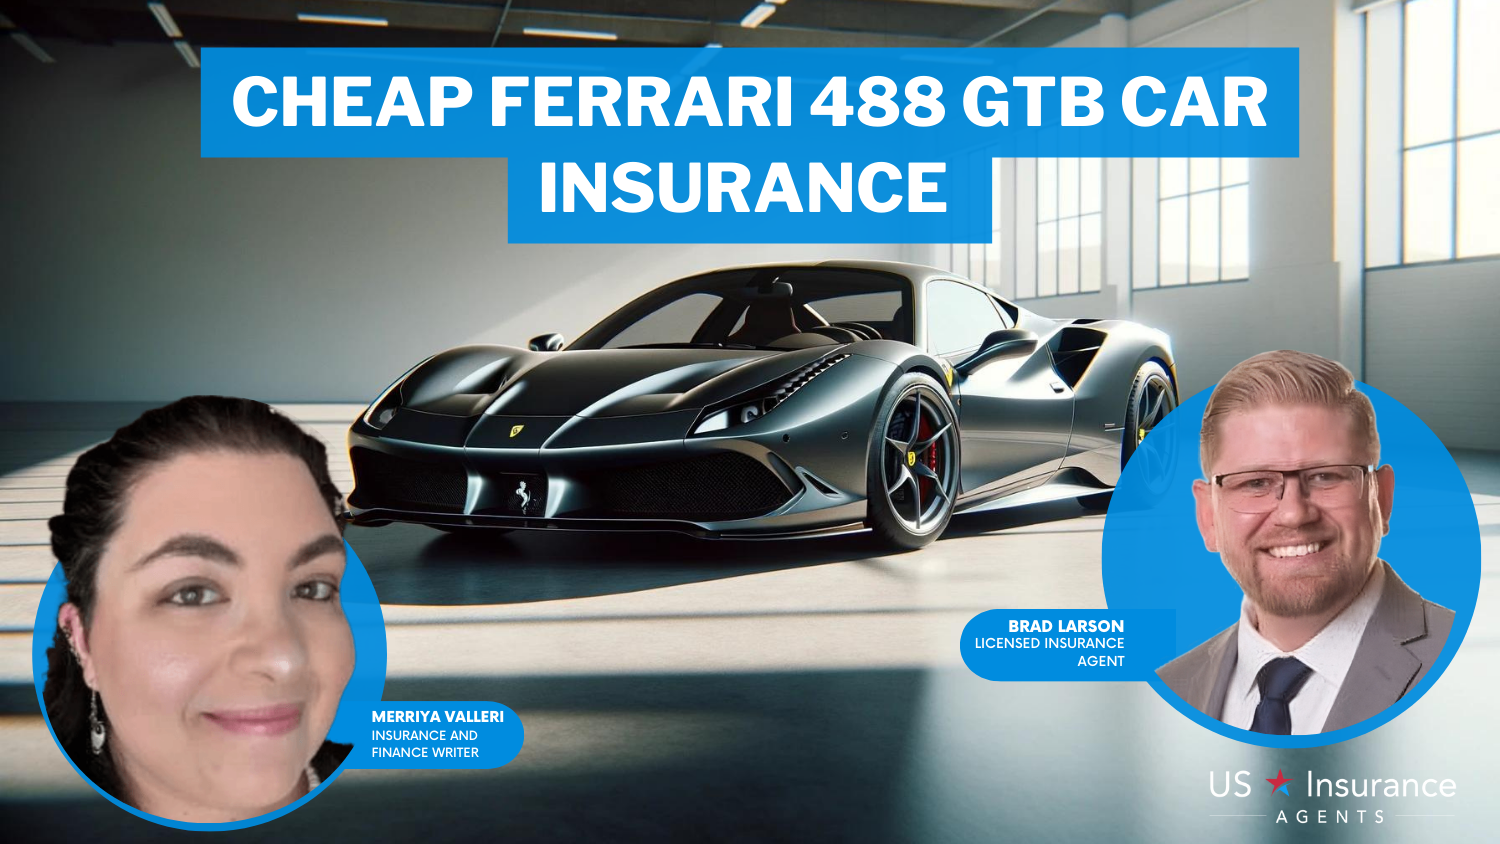 Cheap Ferrari 488 GTB Car Insurance: State Farm, Erie, and Progressive